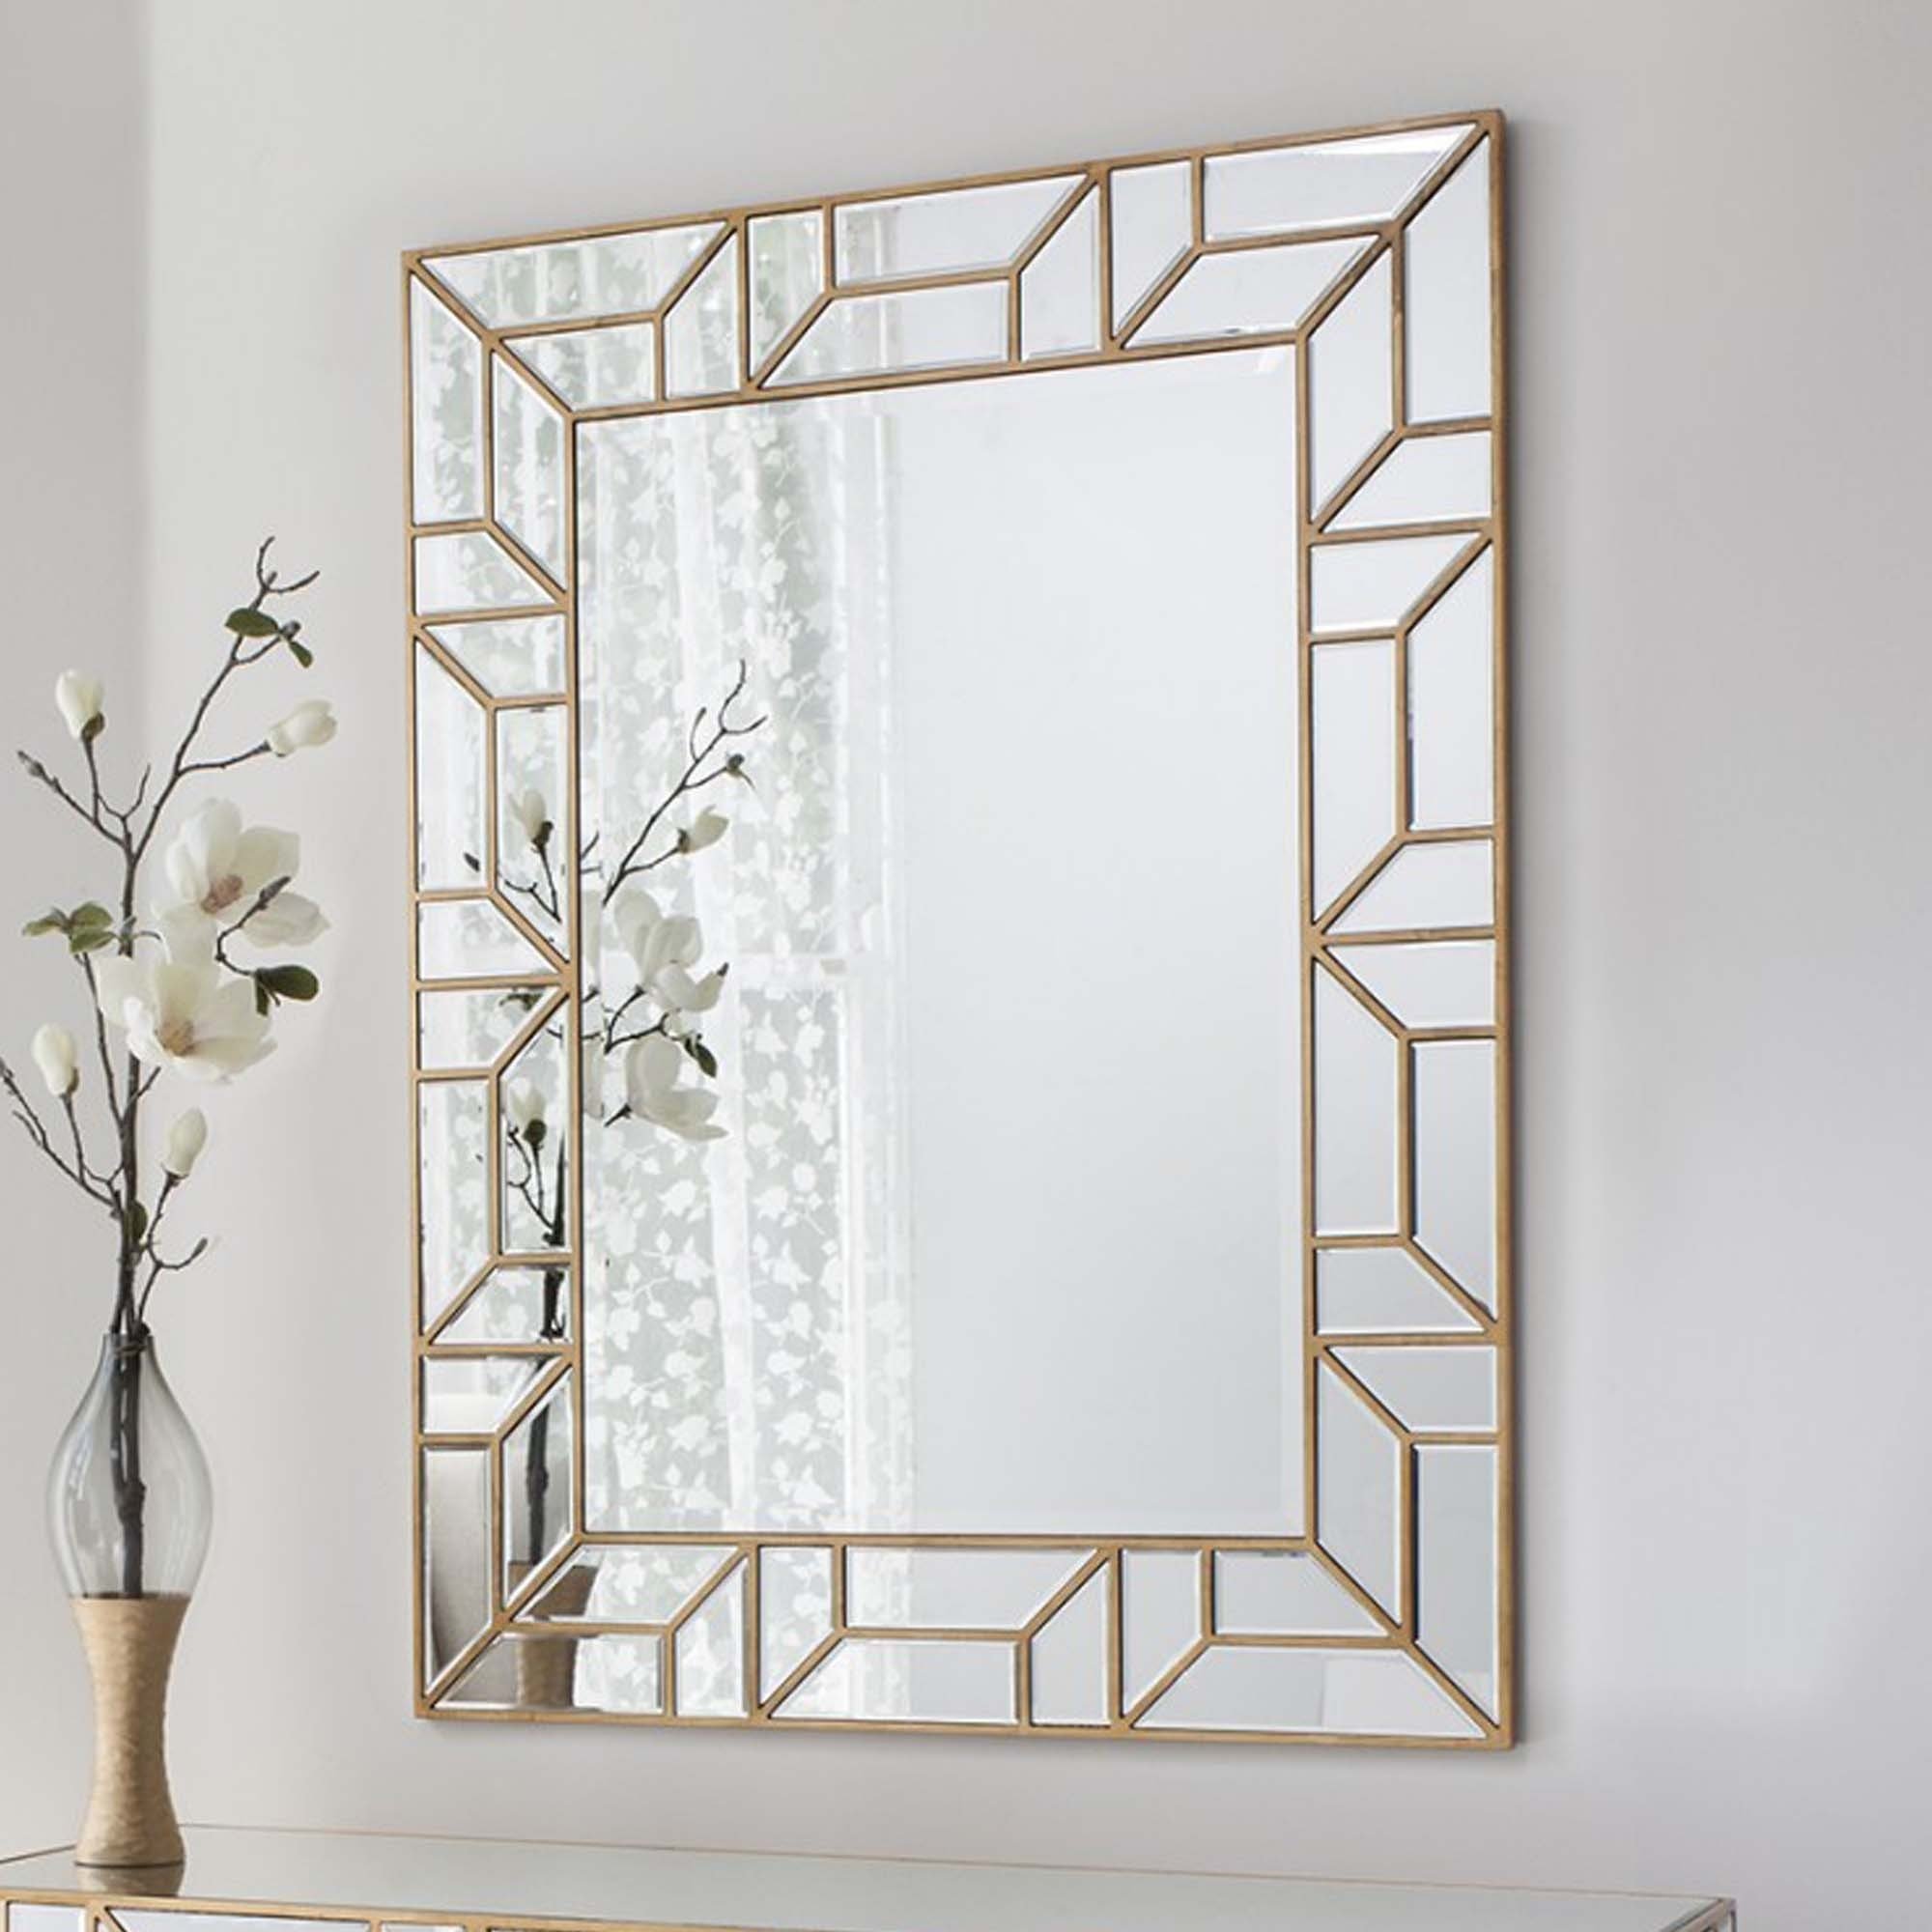 Зеркало на стене без рамки. Рама арт деко. Зеркало "кантон" Louvre Home. Зеркало Гарда декор Glass. Зеркало “Gold Mirror” 60х80 см.